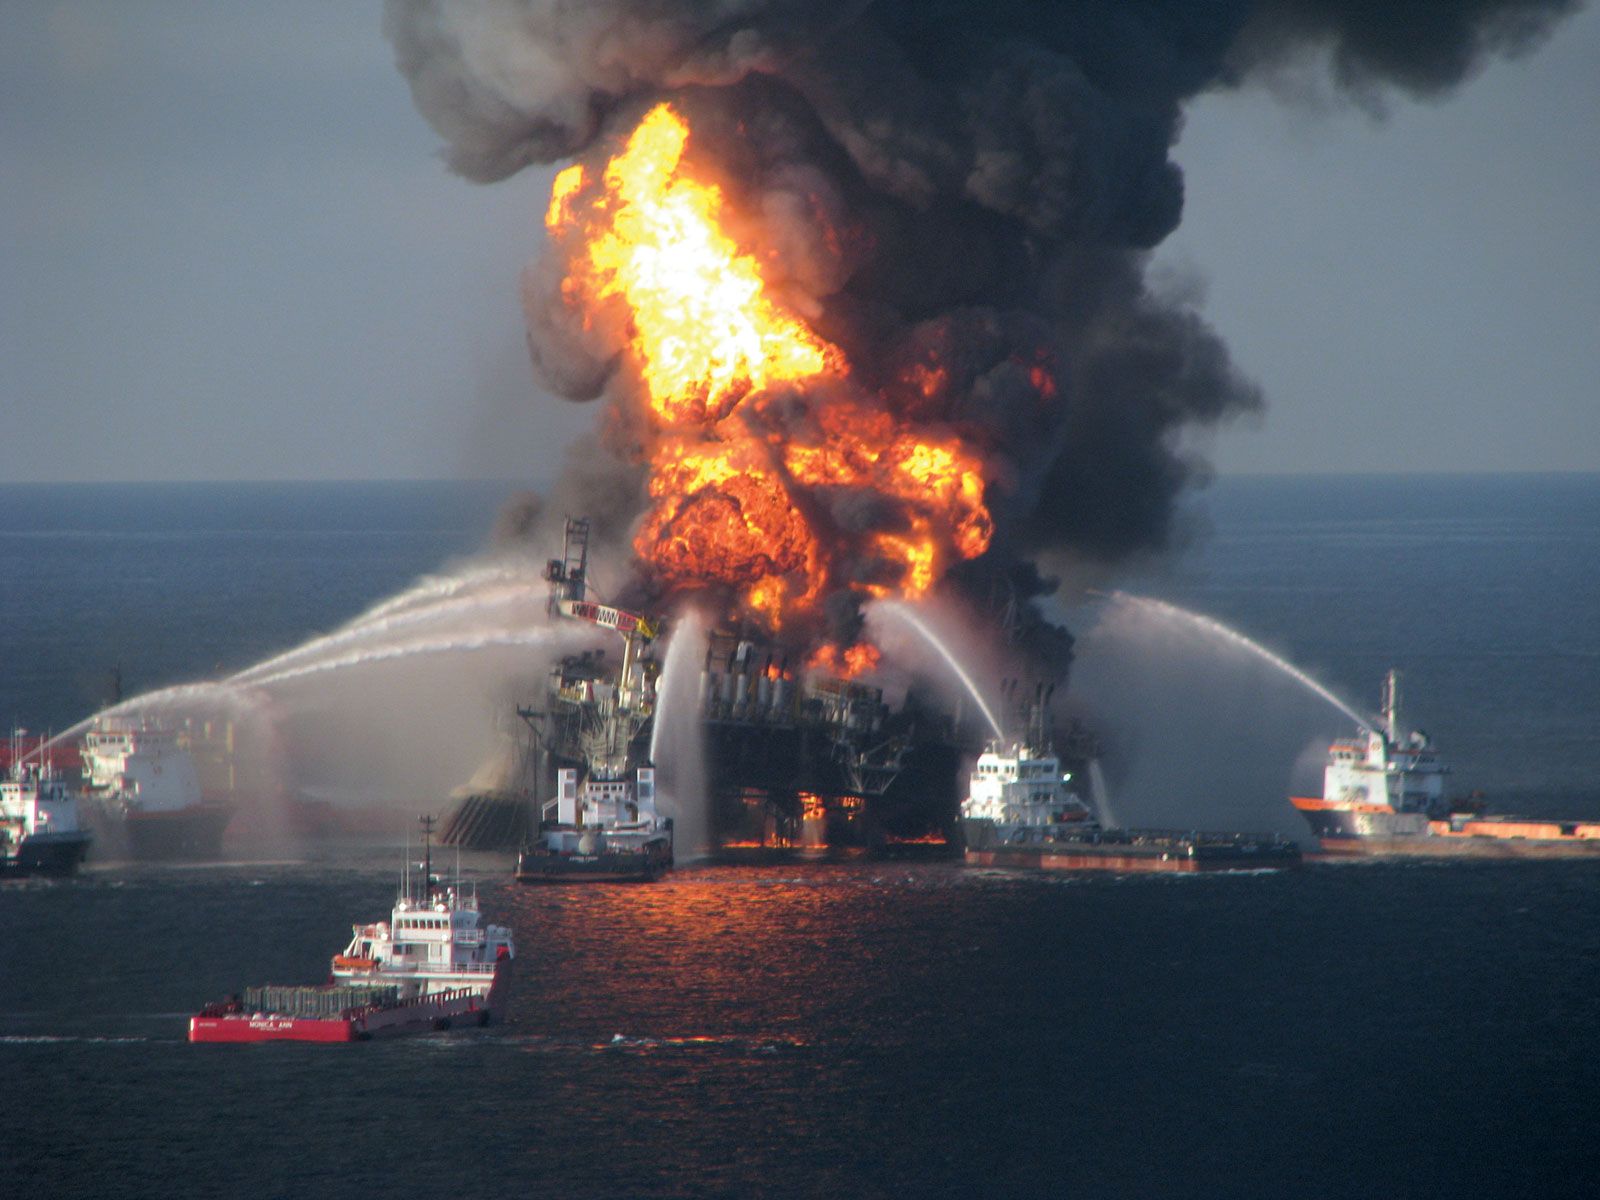 Fireboat-response-crews-blaze-oil-rig-Deepwater-April-21-2010.jpg